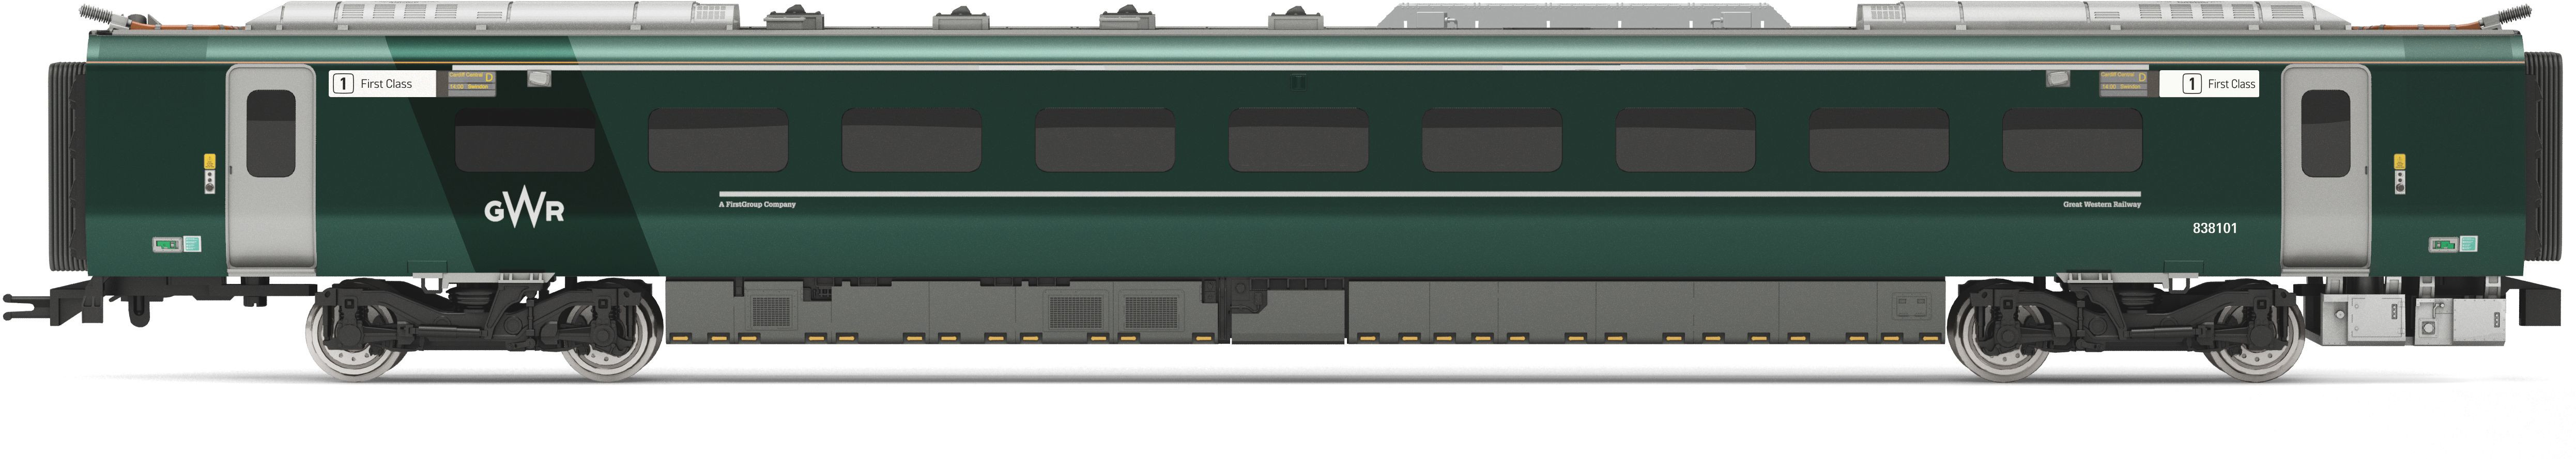 Hornby R3967 Hitachi Class 801 838101 Image